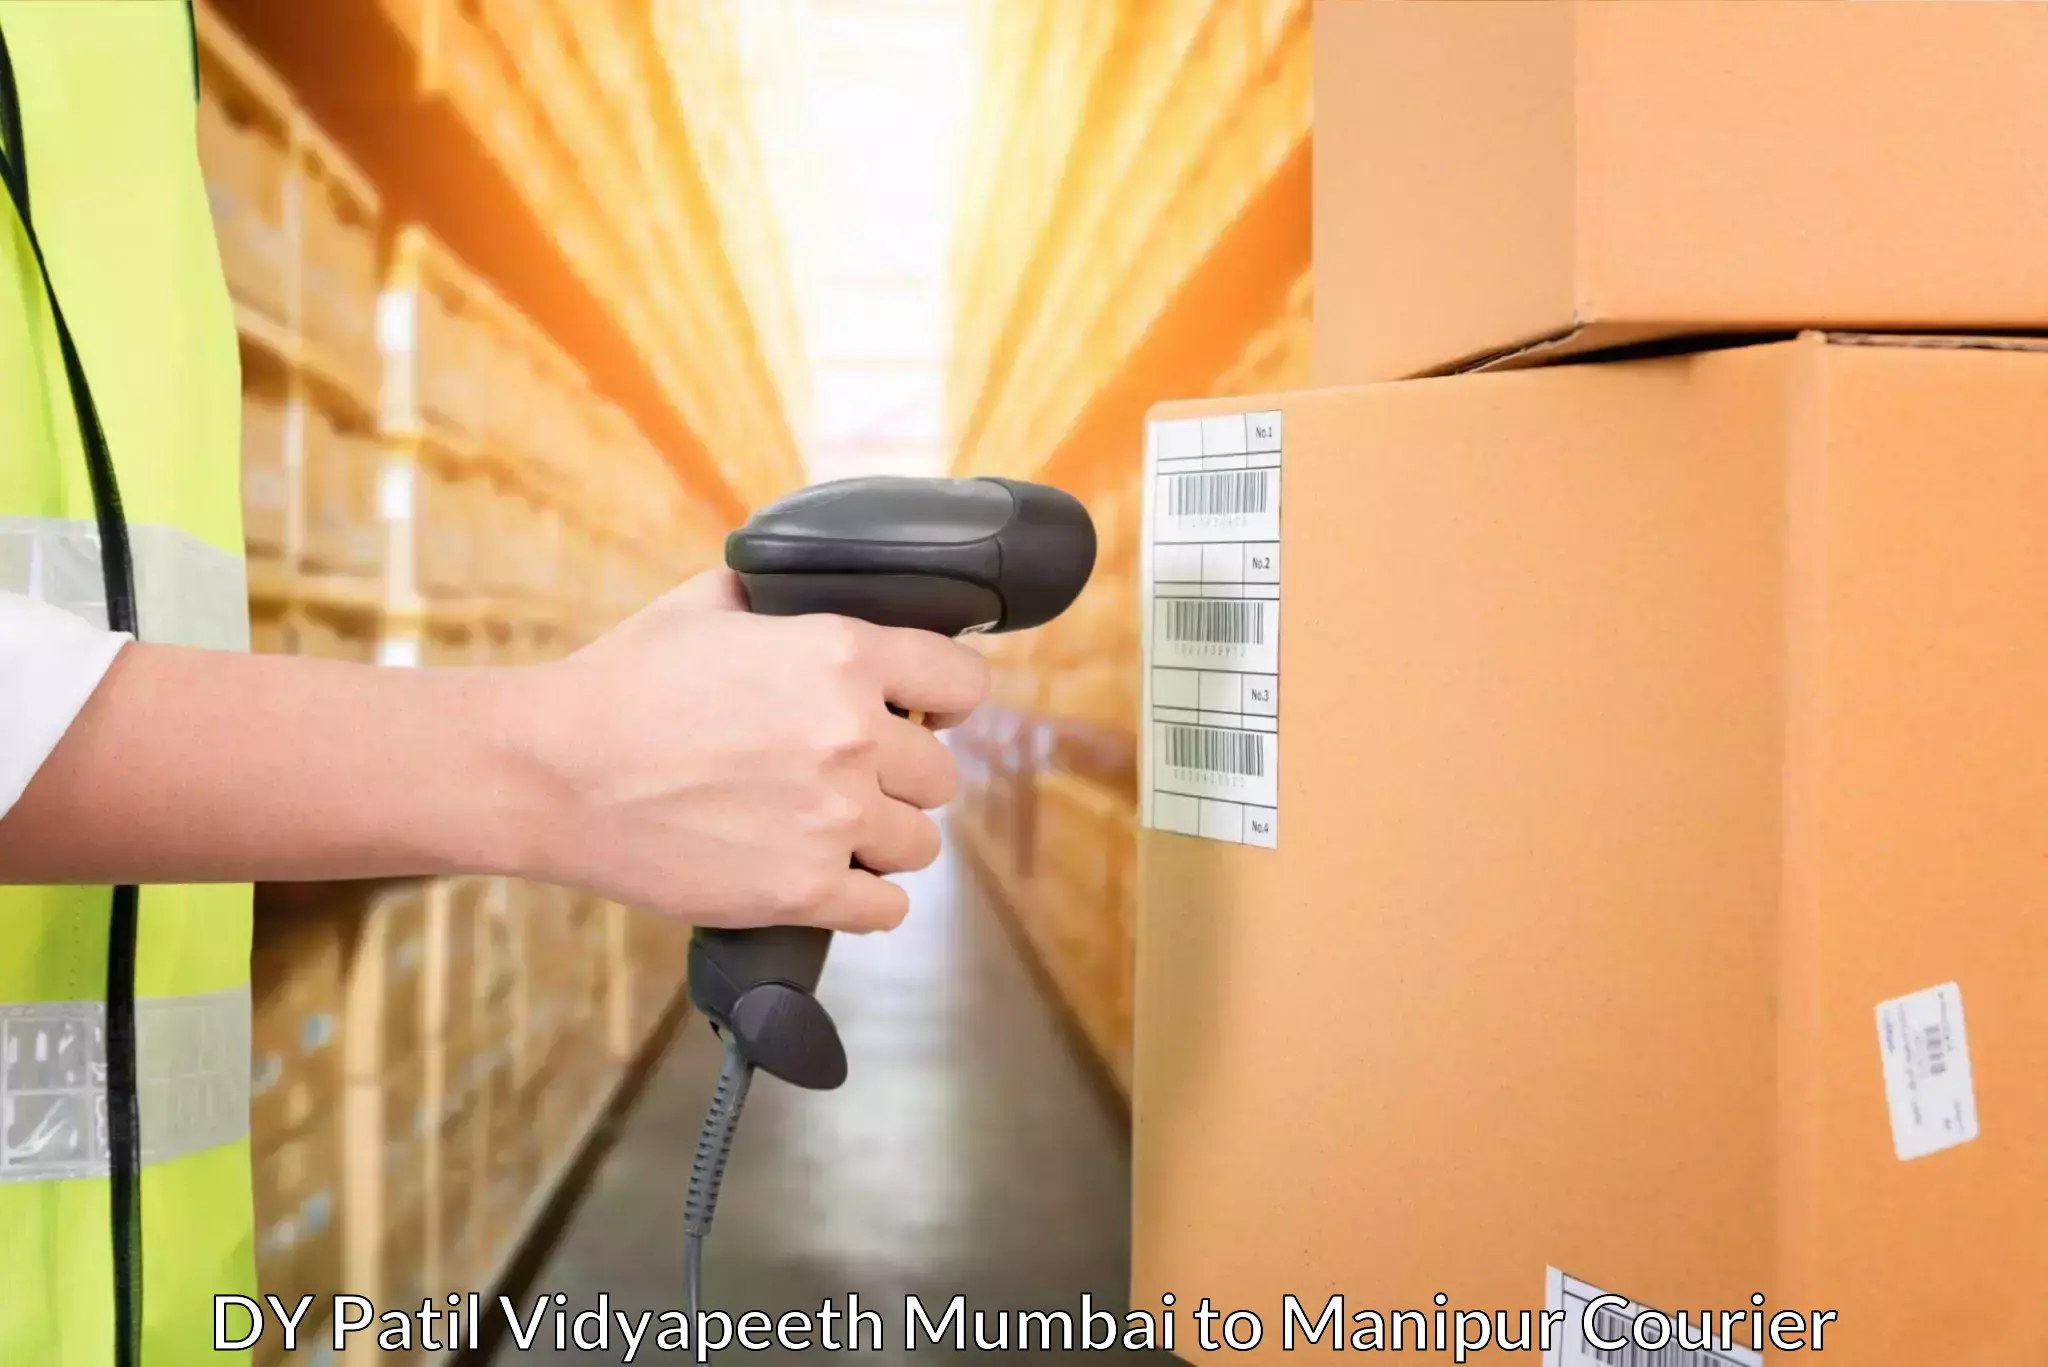 User-friendly delivery service DY Patil Vidyapeeth Mumbai to Kanti